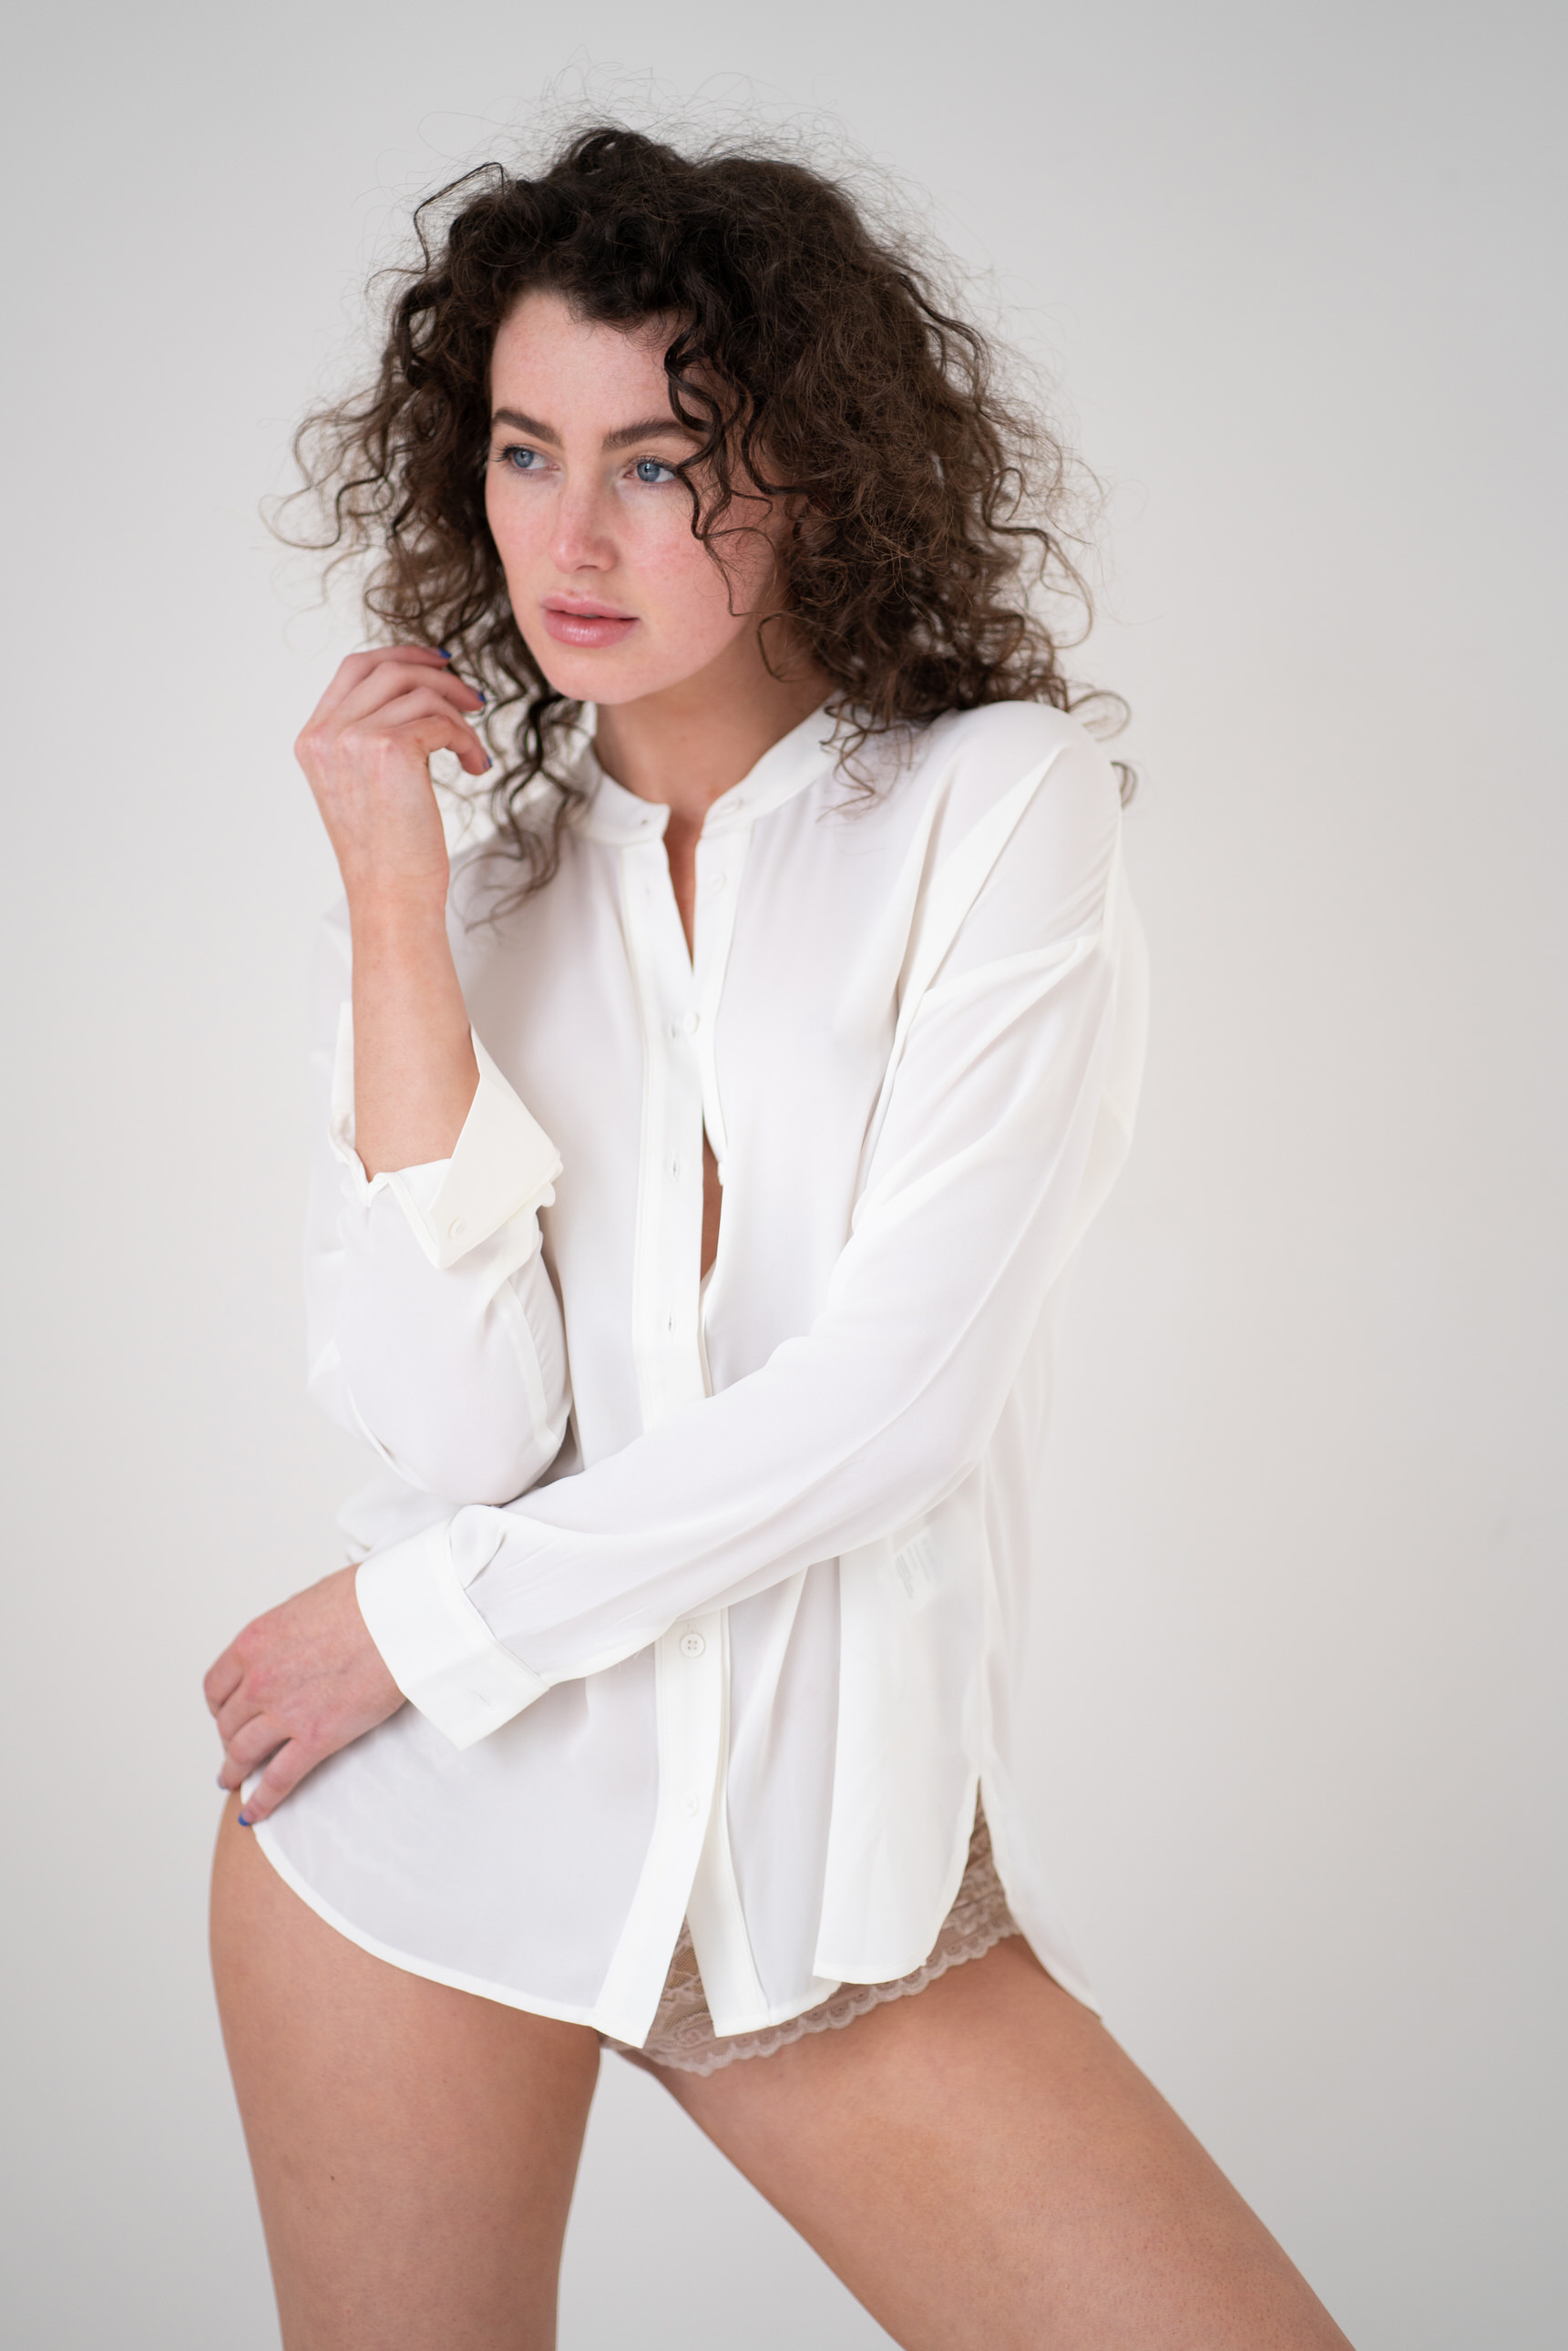 brunette on white background in white shirt by Boudoir Photographer Lancashire